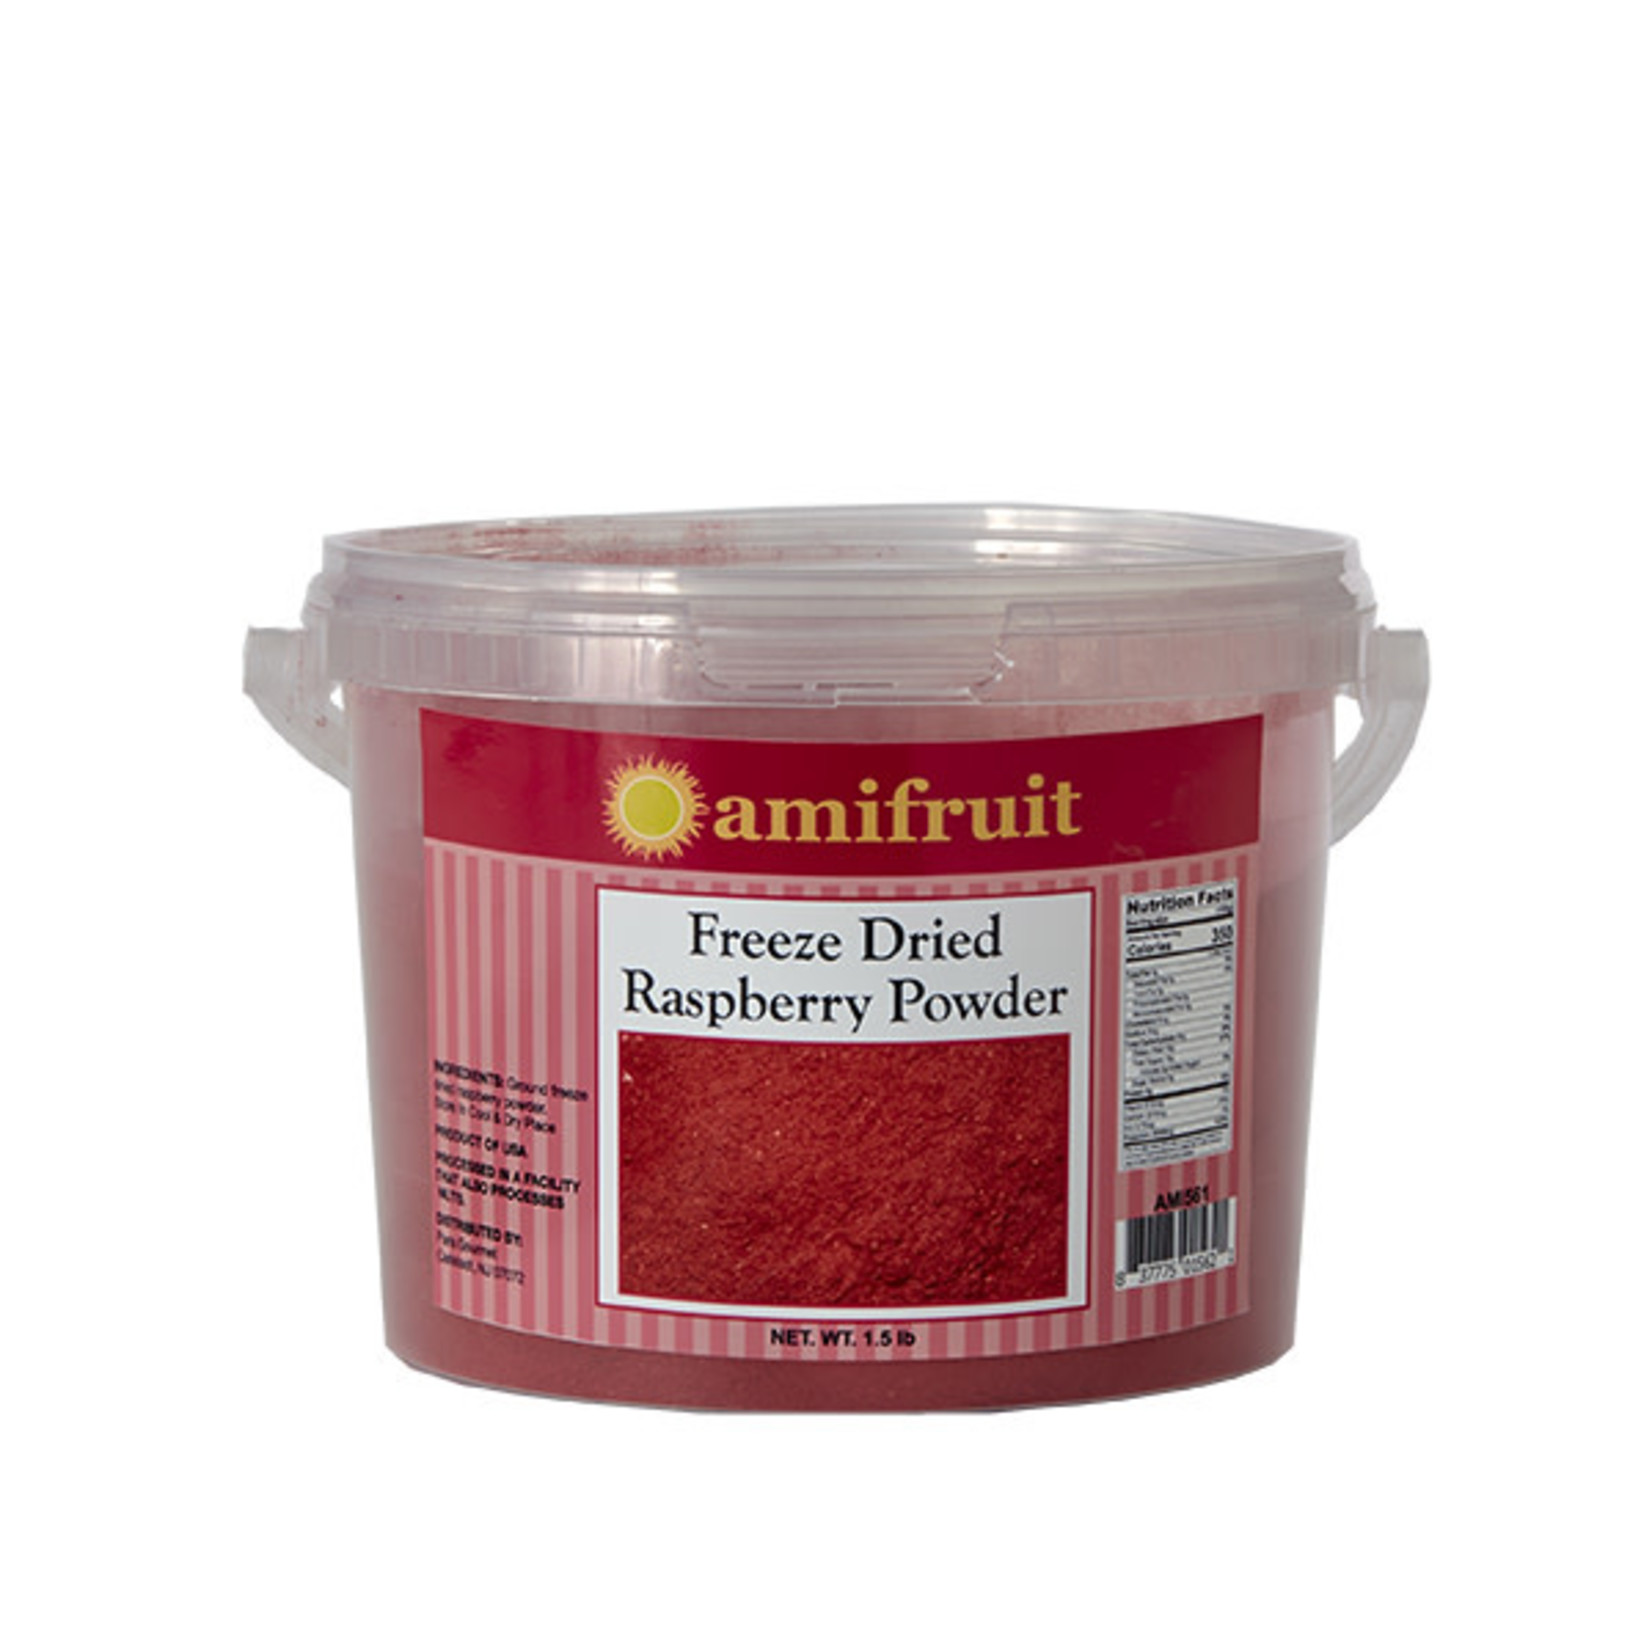 Amifruit Amifruit - Freeze dried Raspberry Powder - 1.5lb, AMI561